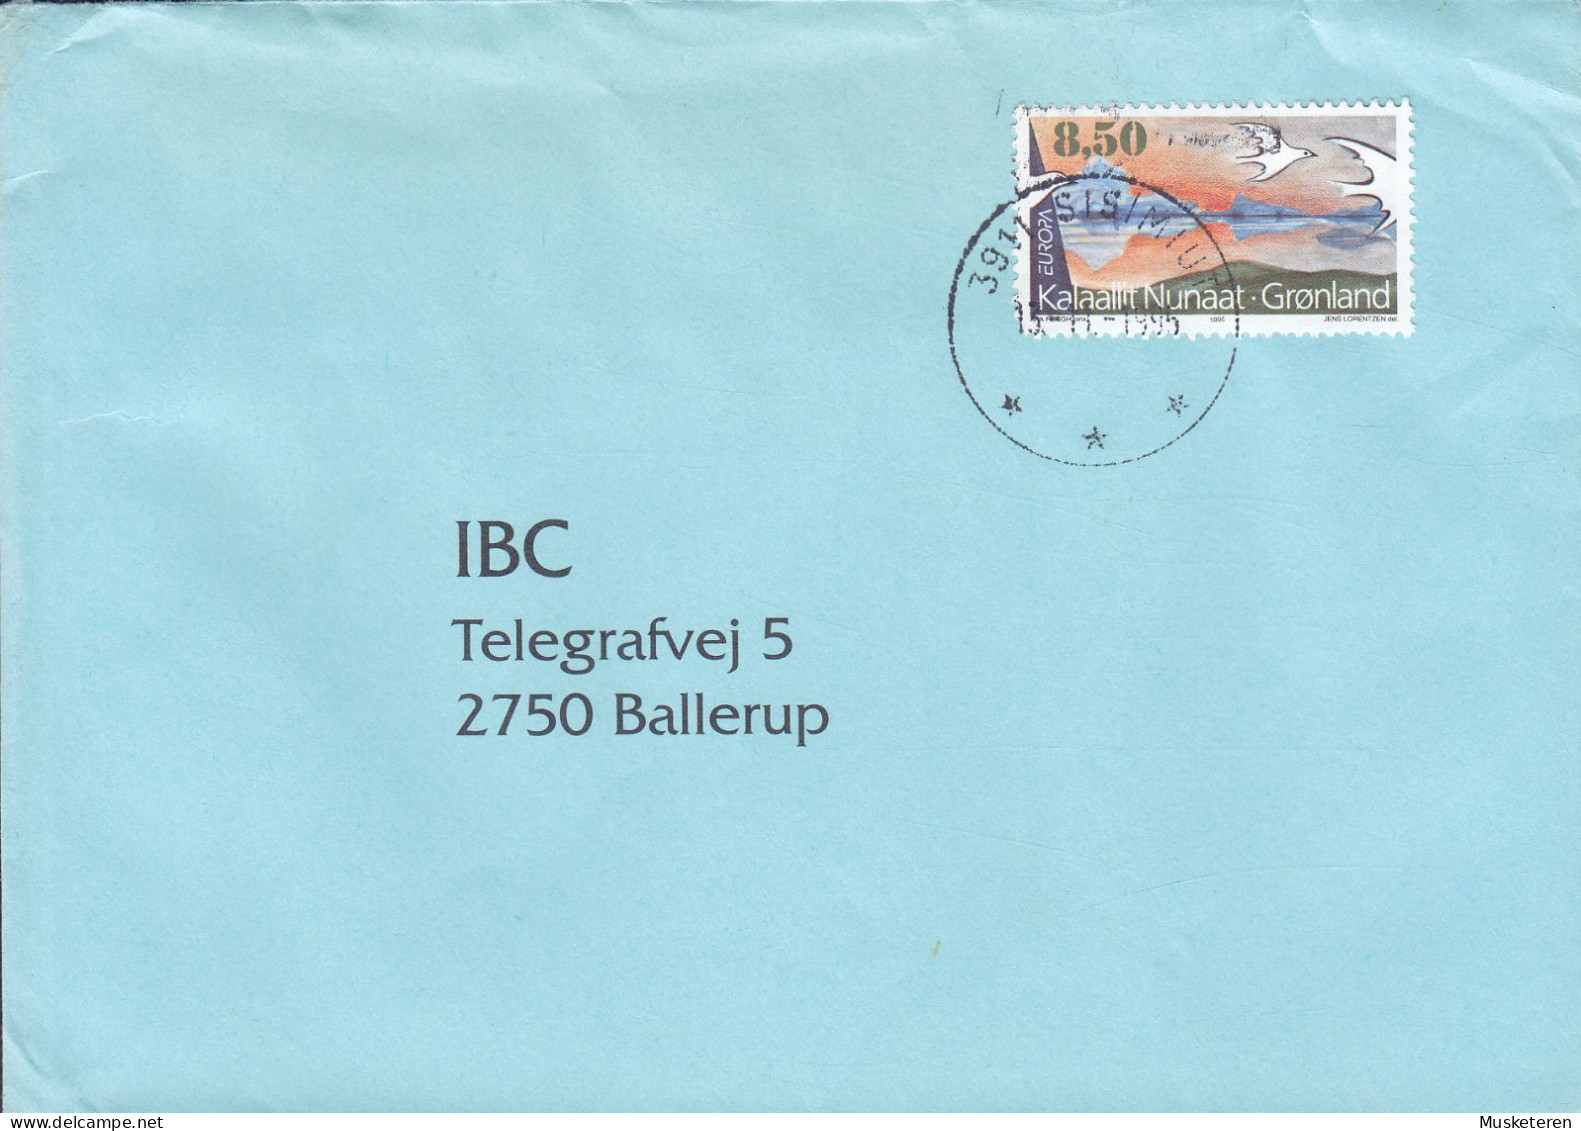 Greenland SISIMIUT 1995 Cover Brief Lettre BALLERUP Denmark 8.50 Kr. Europa CEPT Stamp - Briefe U. Dokumente